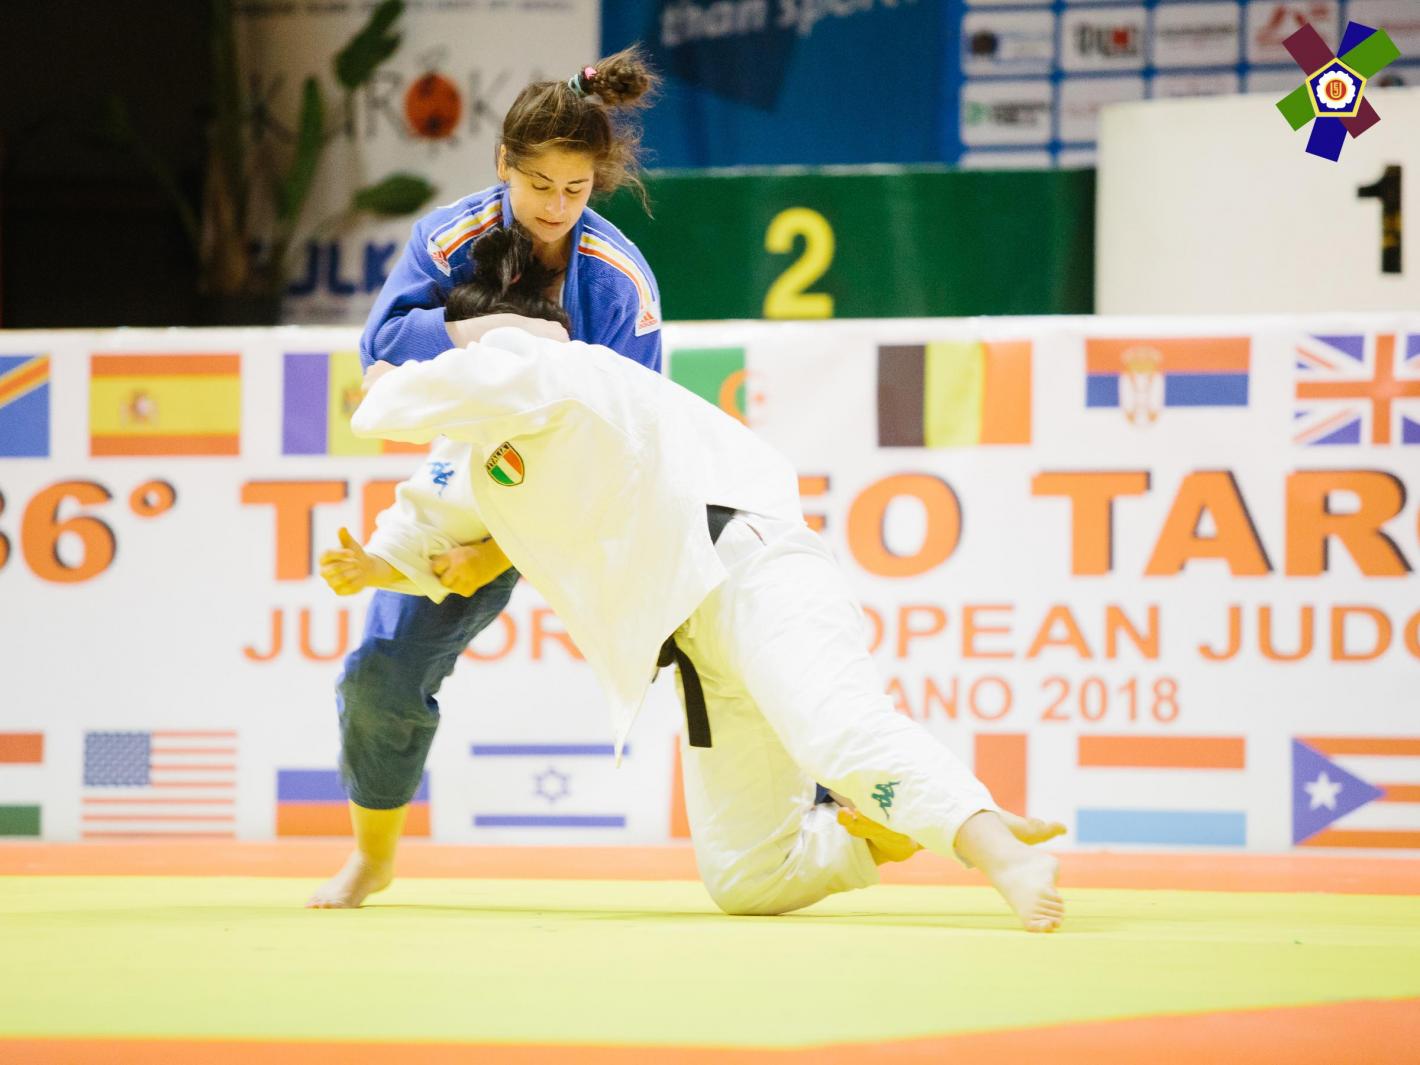 images/friuli_venezia_giulia/medium/EJU-Junior-European-Judo-Cup-Lignano-2018-04-07-Erika-Zucchiatti-309420.jpg